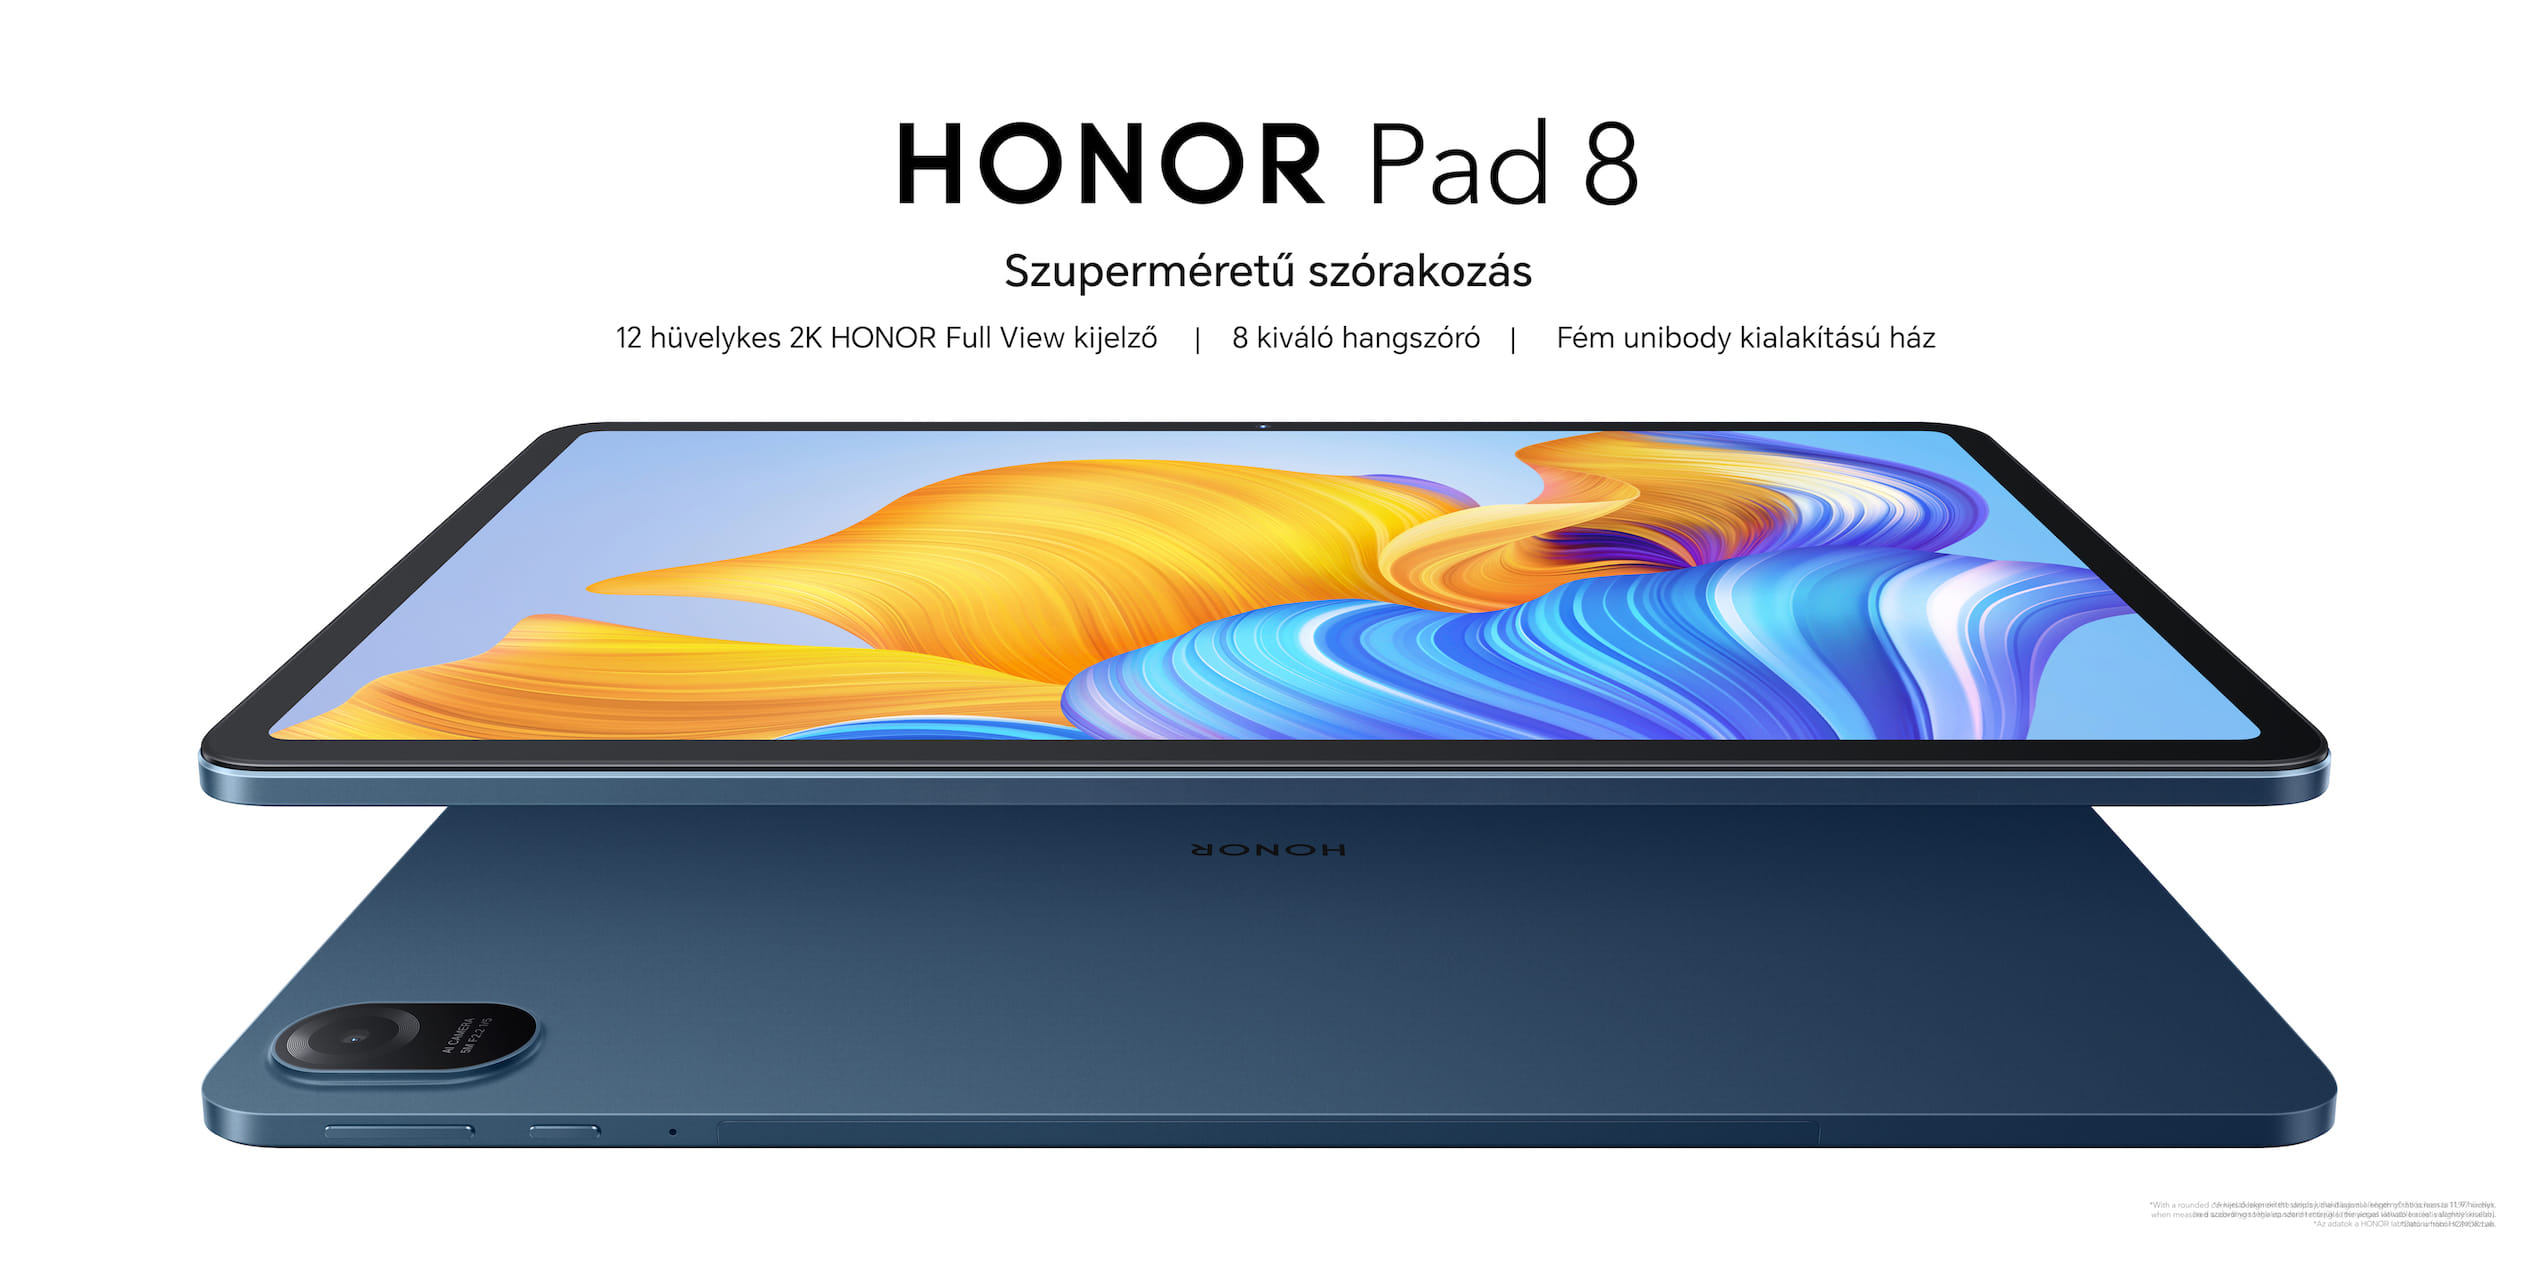 Megjelent két igen olcsó tablet, a Honor Pad 8 és a Honor Pad X8